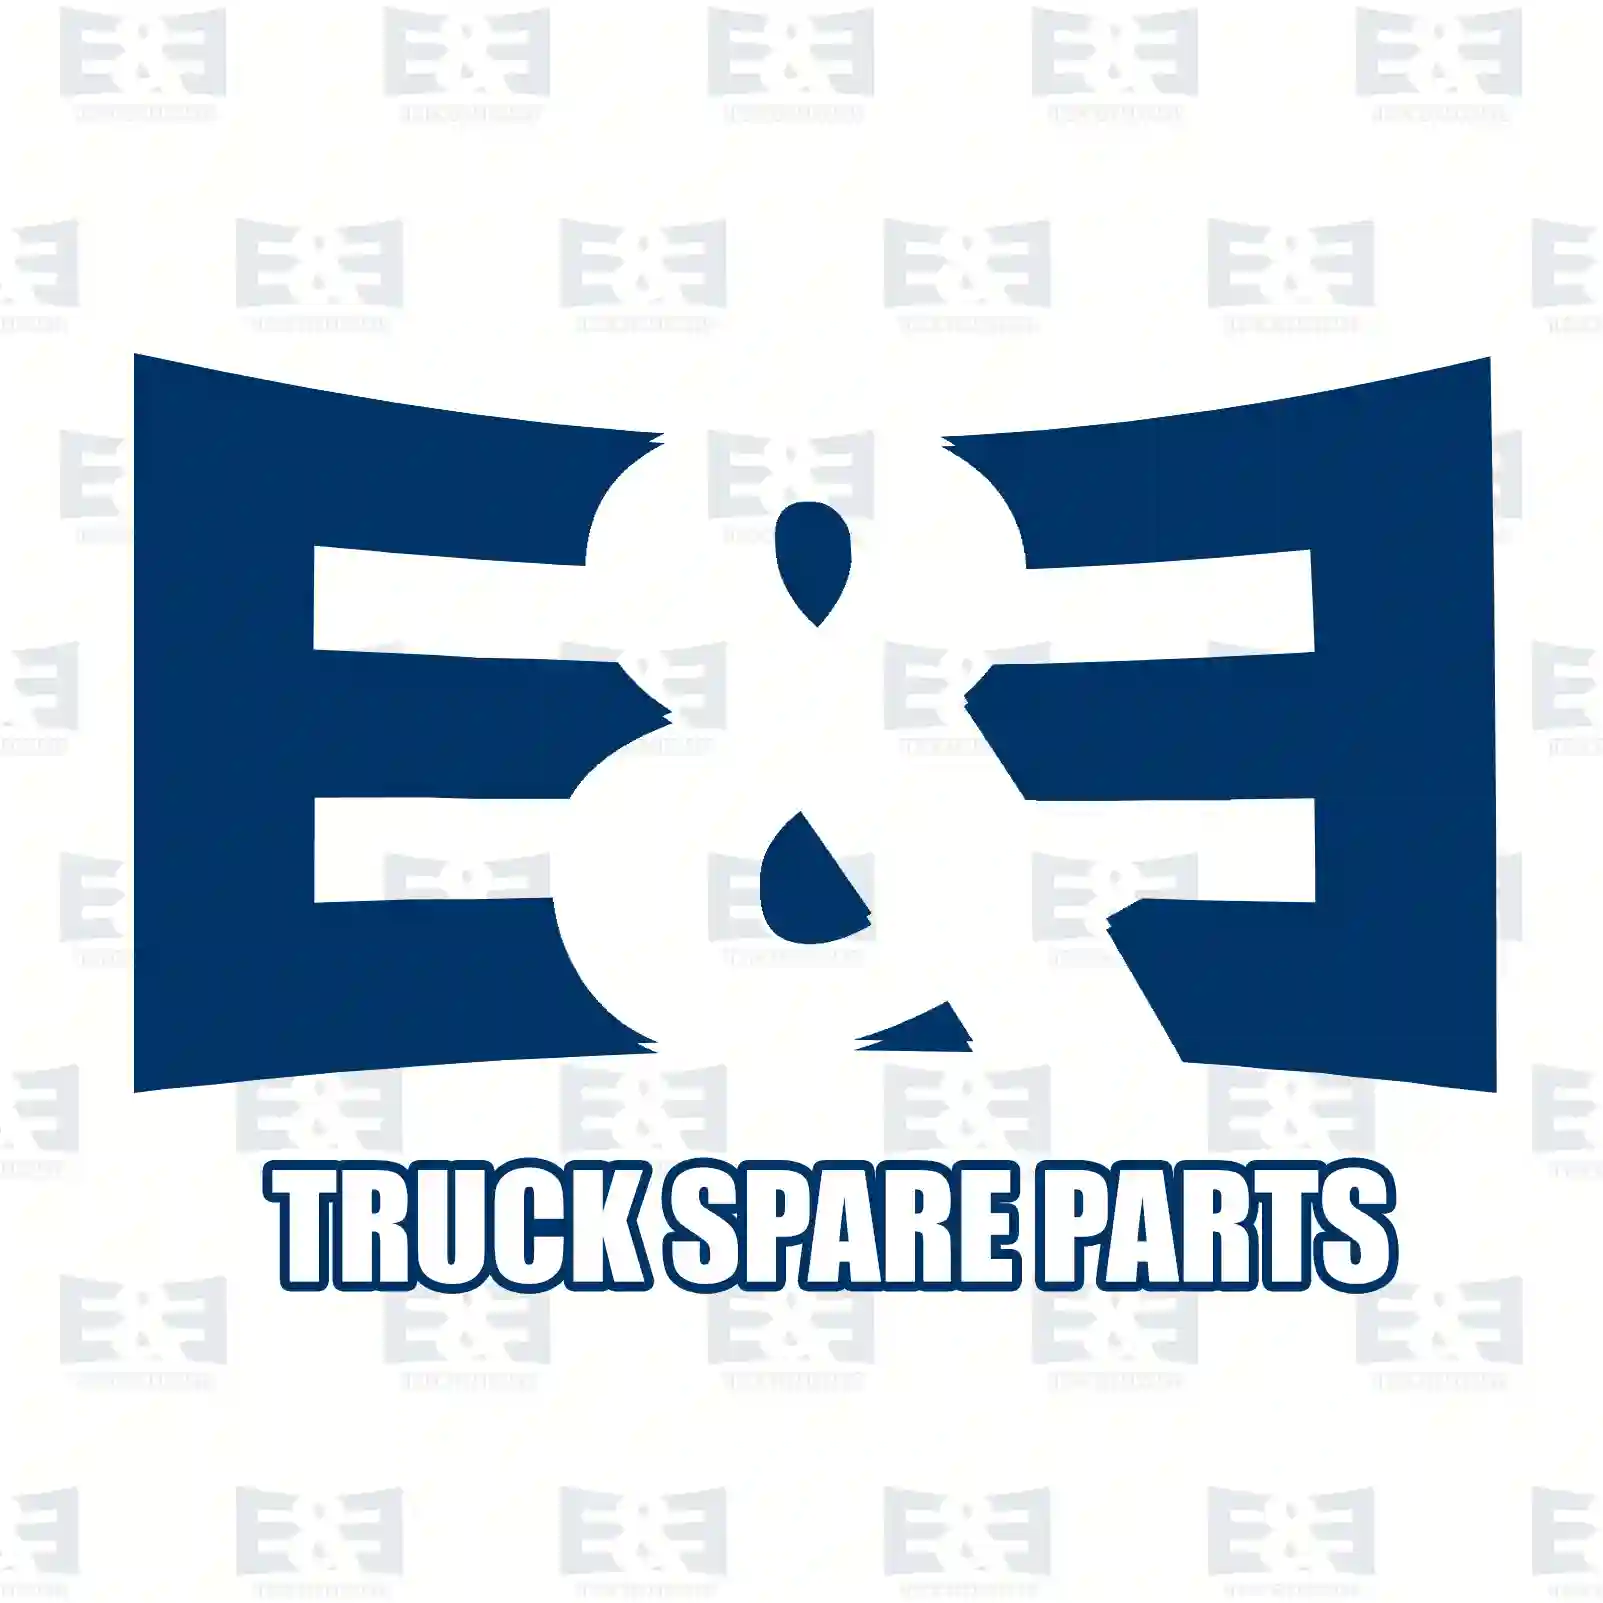 Reaction rod, 2E2283711, 81432206129, 81432206014, 81432206030, 81432206096, 81432206097, 81432206098, 81432206129, 81432209096, 81432209097, 81432209129, 81432306014, 81432306030, 81432306129 ||  2E2283711 E&E Truck Spare Parts | Truck Spare Parts, Auotomotive Spare Parts Reaction rod, 2E2283711, 81432206129, 81432206014, 81432206030, 81432206096, 81432206097, 81432206098, 81432206129, 81432209096, 81432209097, 81432209129, 81432306014, 81432306030, 81432306129 ||  2E2283711 E&E Truck Spare Parts | Truck Spare Parts, Auotomotive Spare Parts